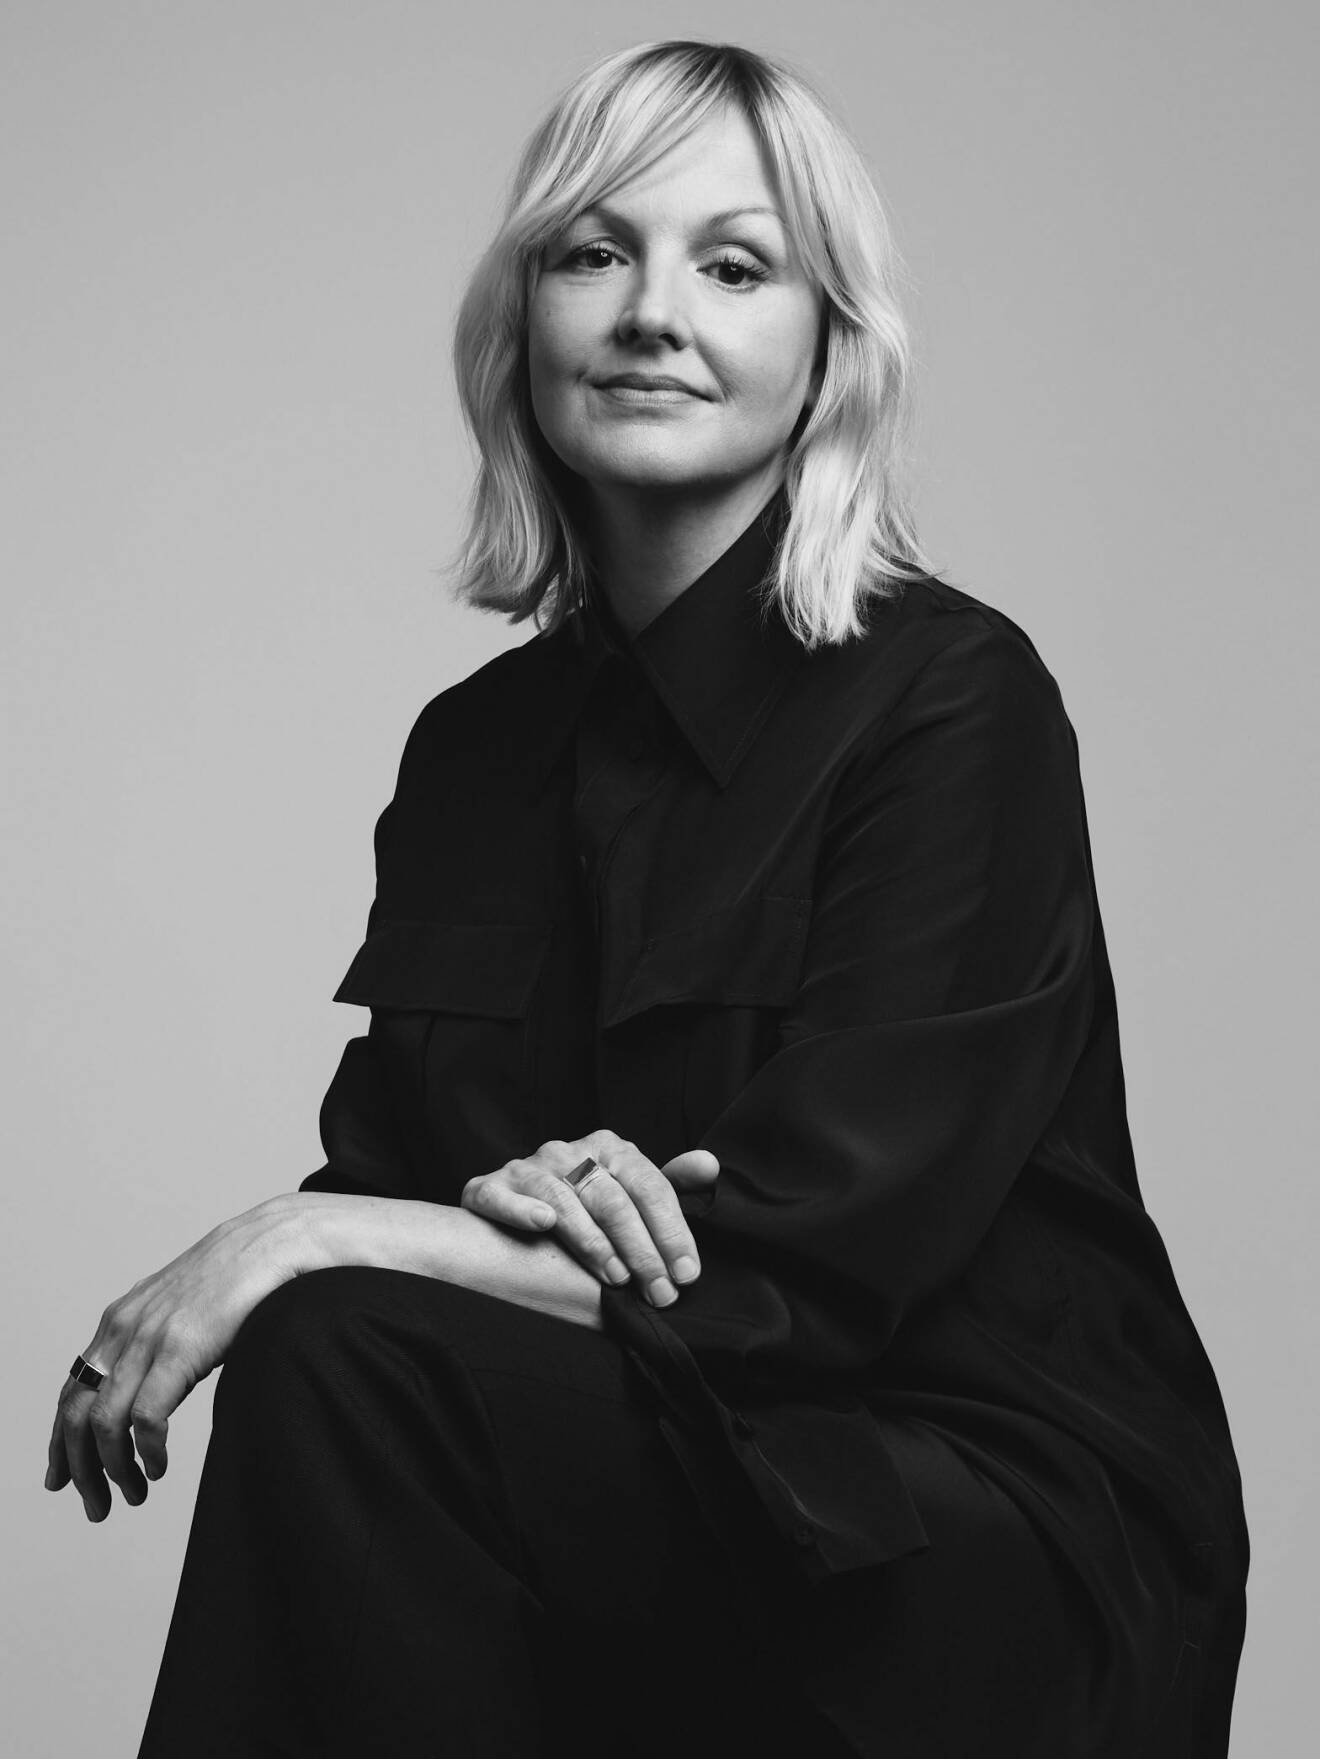 Cos design director Karin Gustafsson